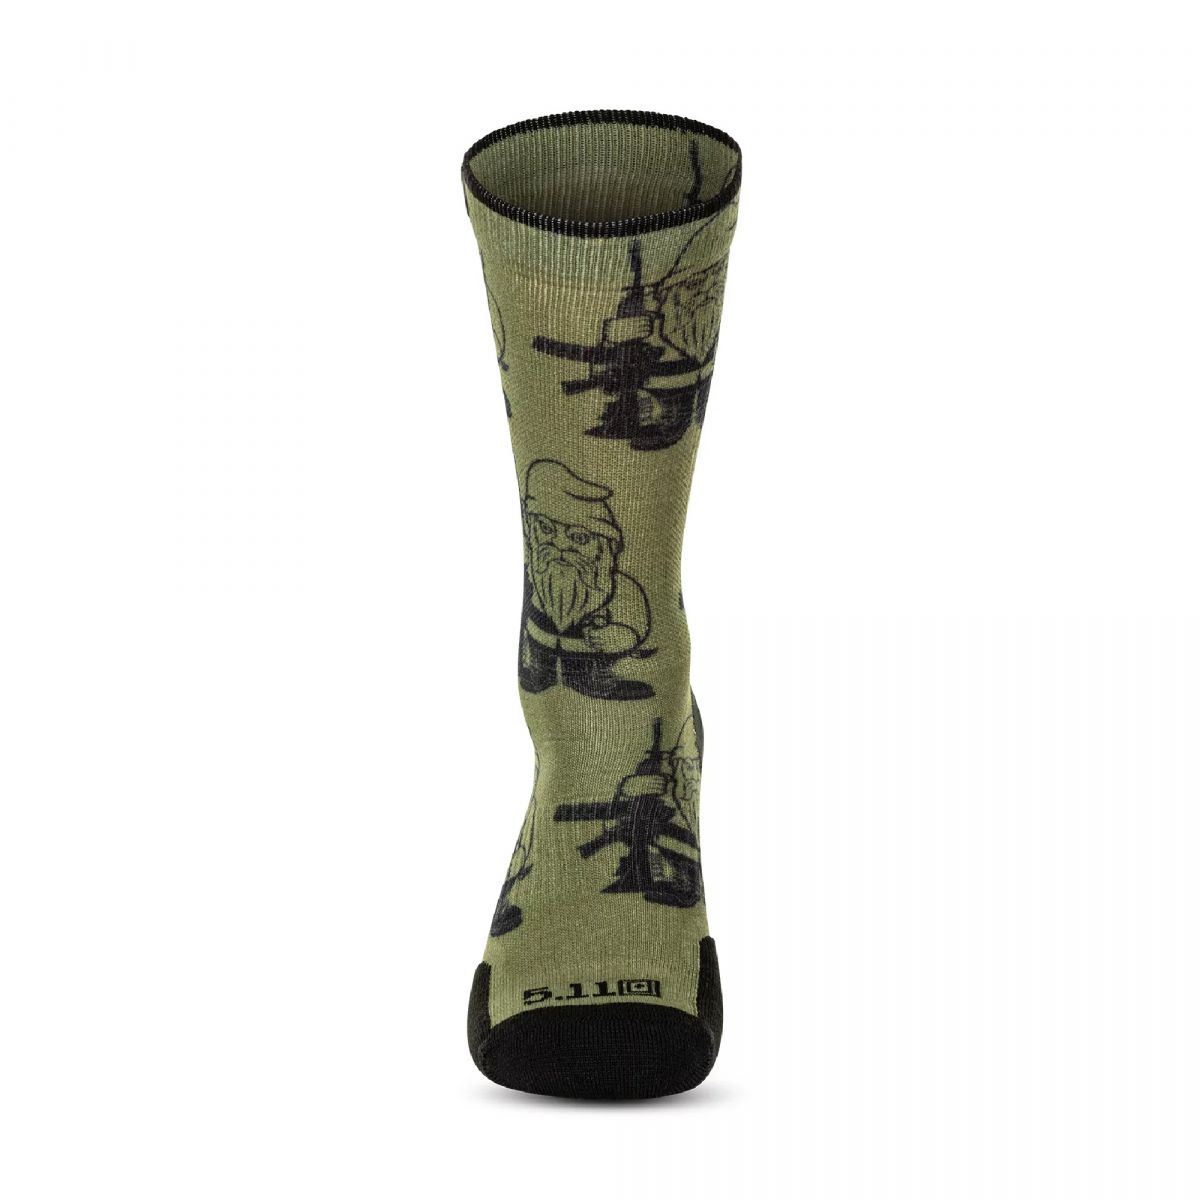 Носки 5.11 Tactical®. Модель Sock and Awe Gnome 3